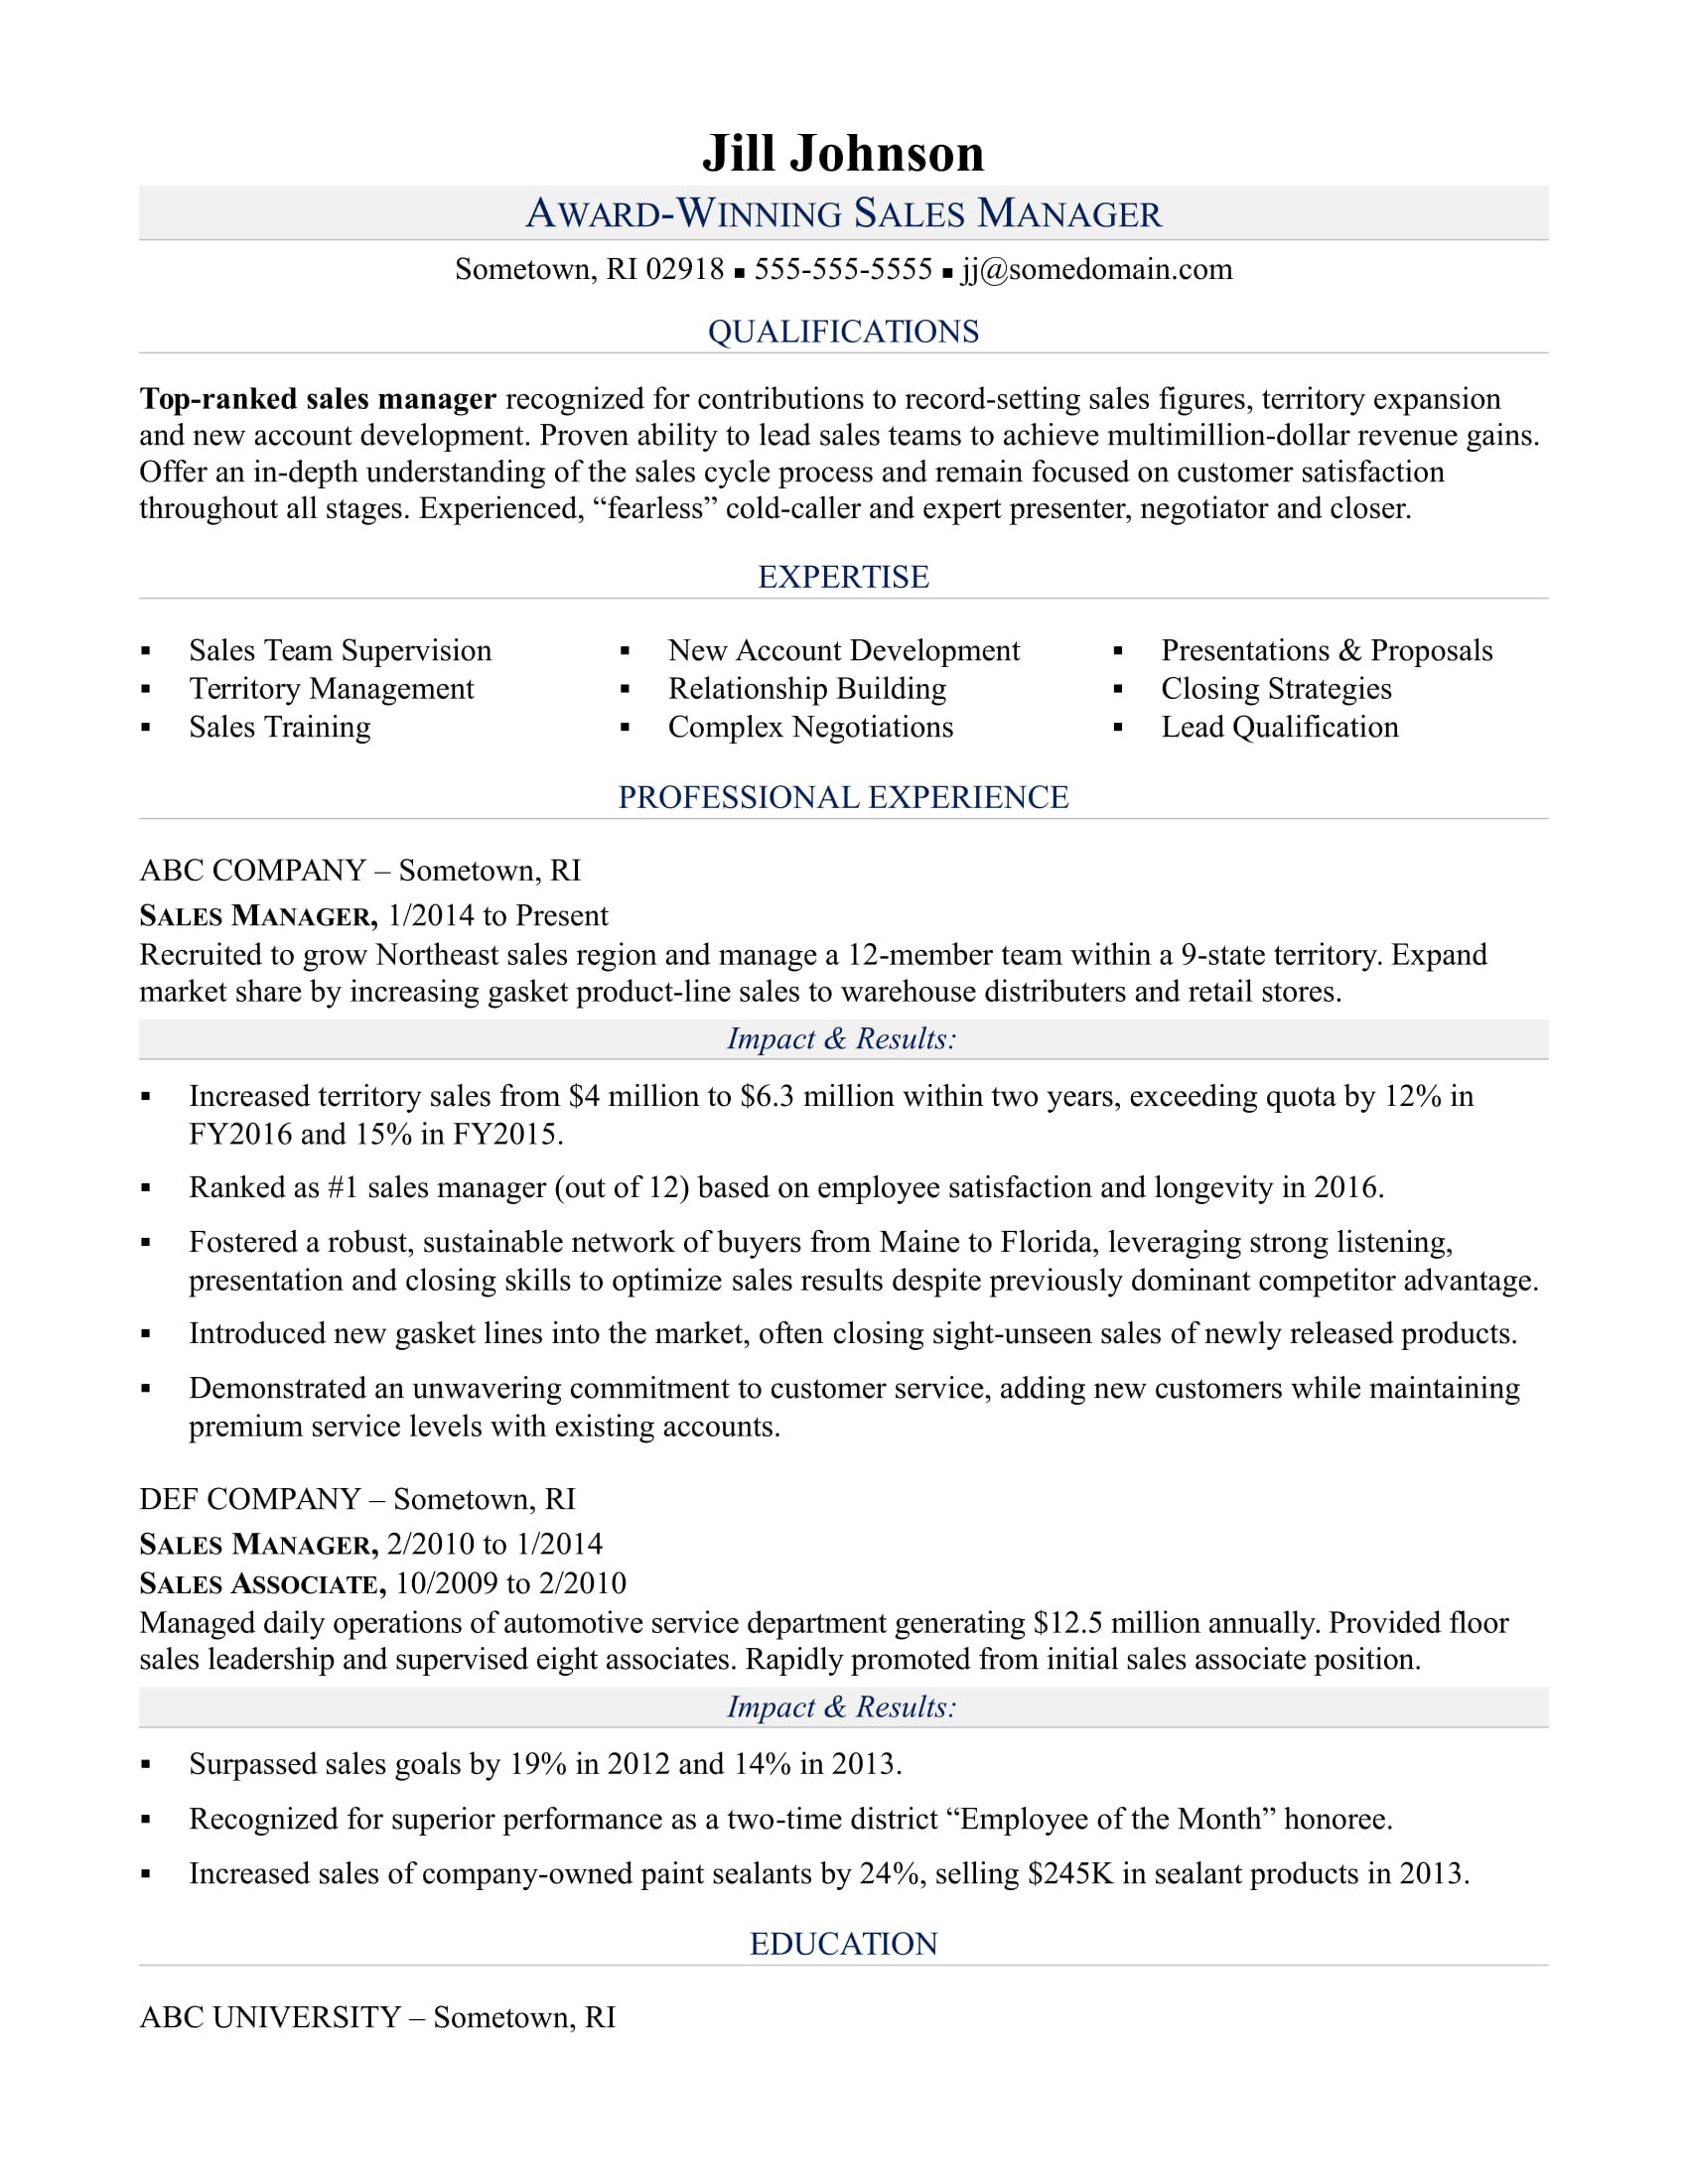 Sample Resume Objective for Sales Position Sales Manager Resume Sample Monster.com